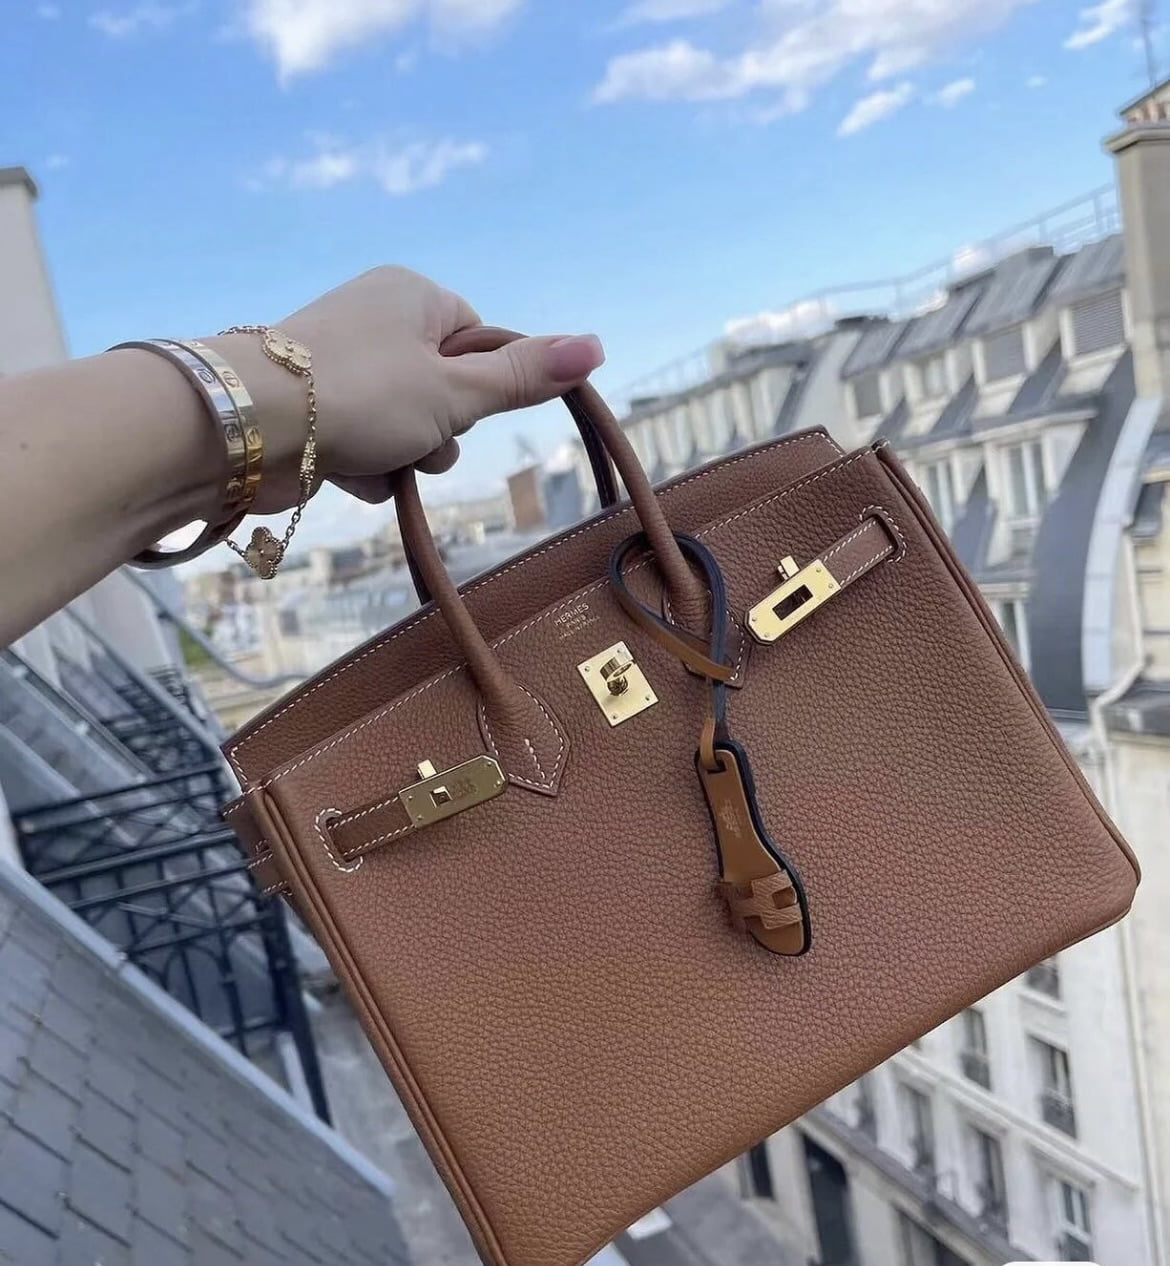 Celebs Take to Instagram to Flaunt Their Handbag Game - PurseBop